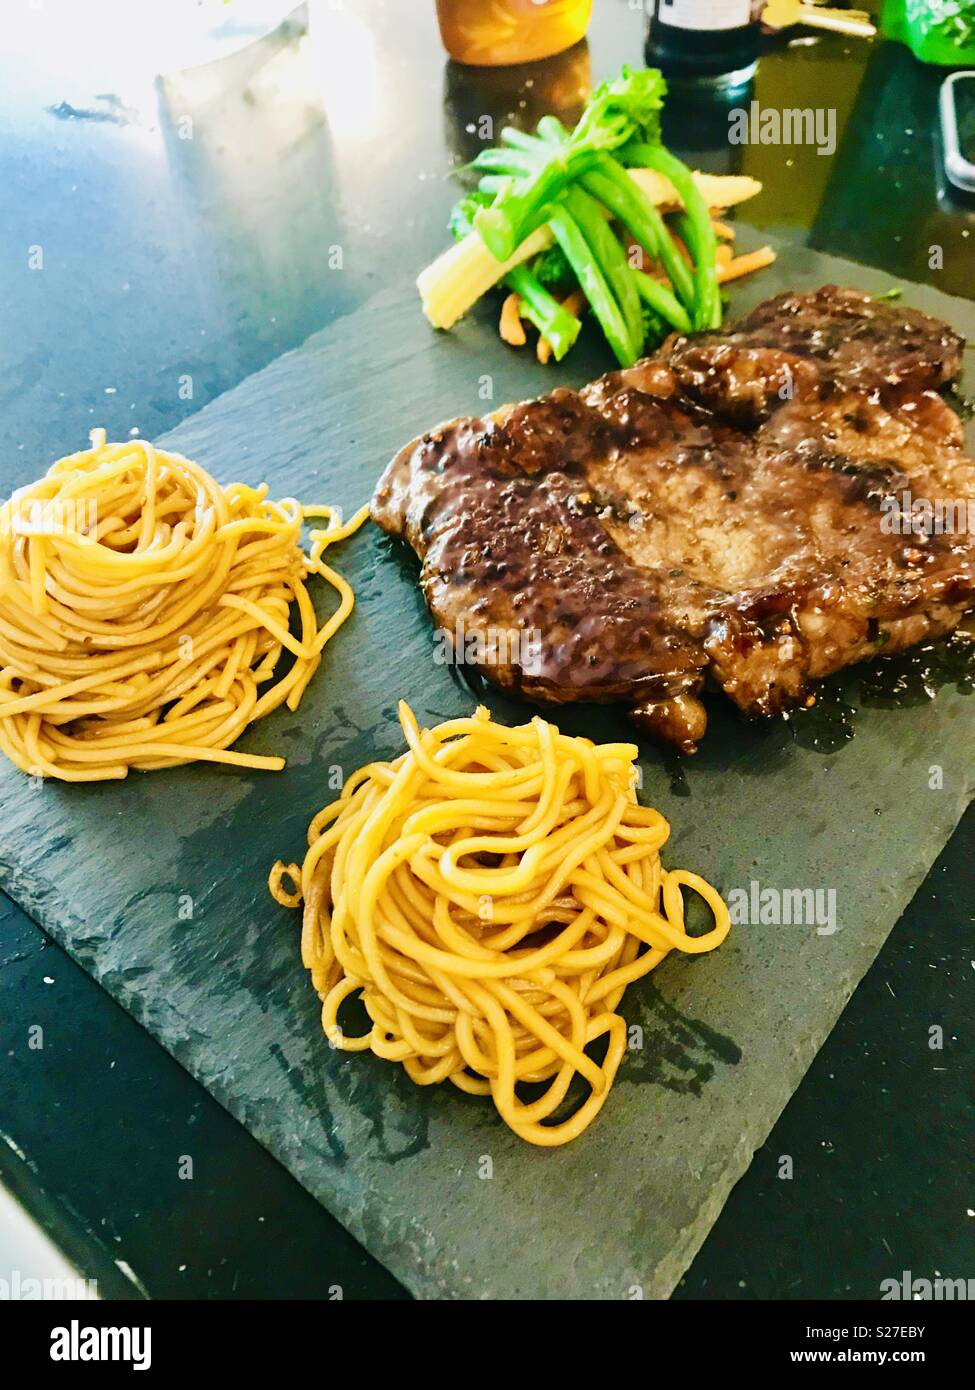 Homemade flatiron steak and noodles Stock Photo - Alamy